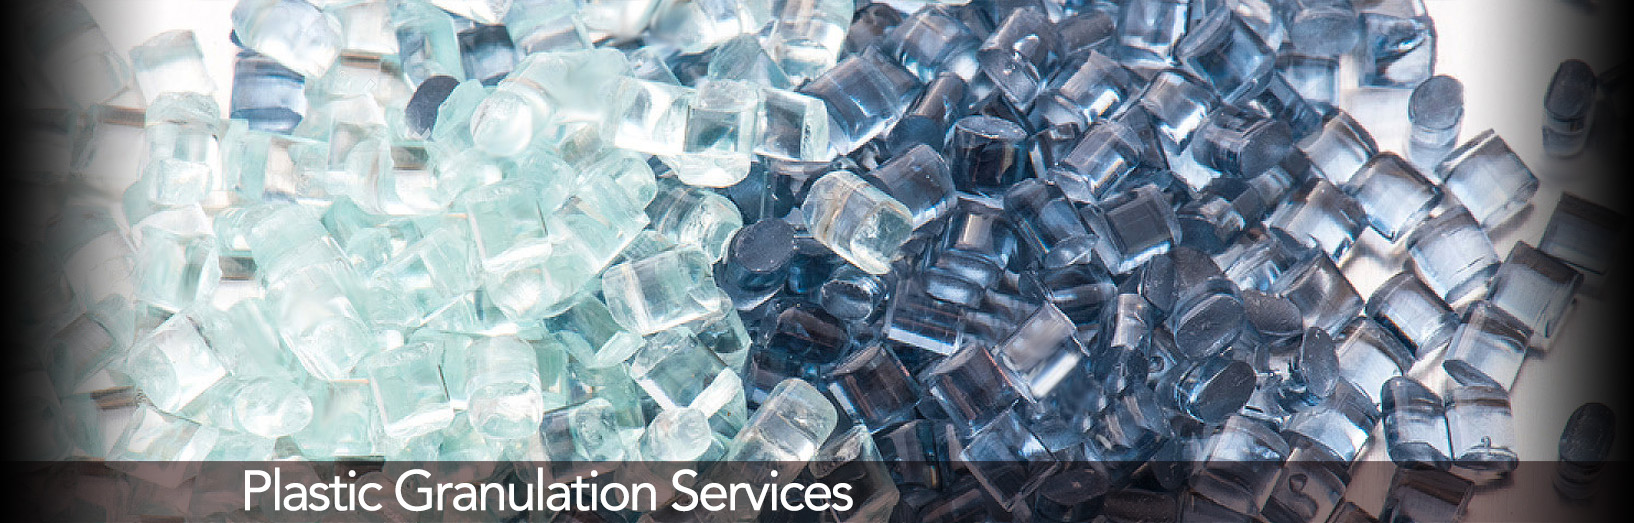 Plastic Granulation Services